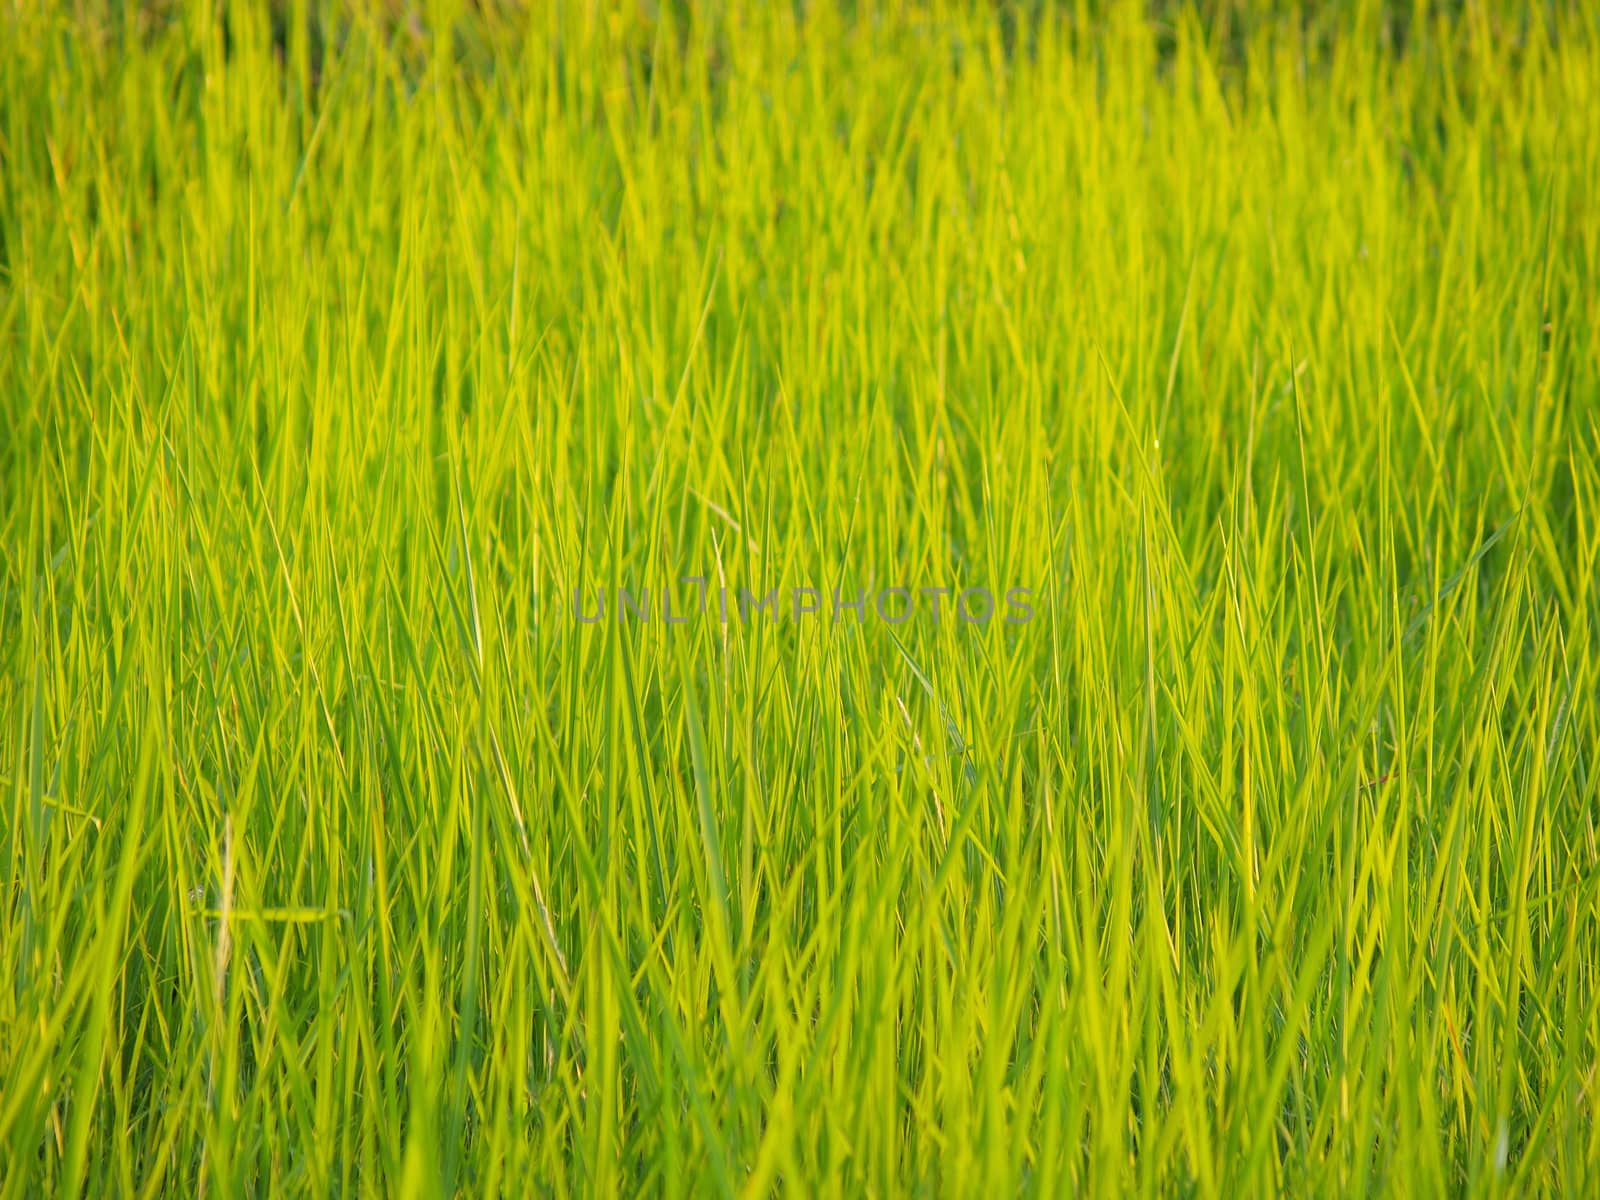 Green rice field in Thailand by jakgree